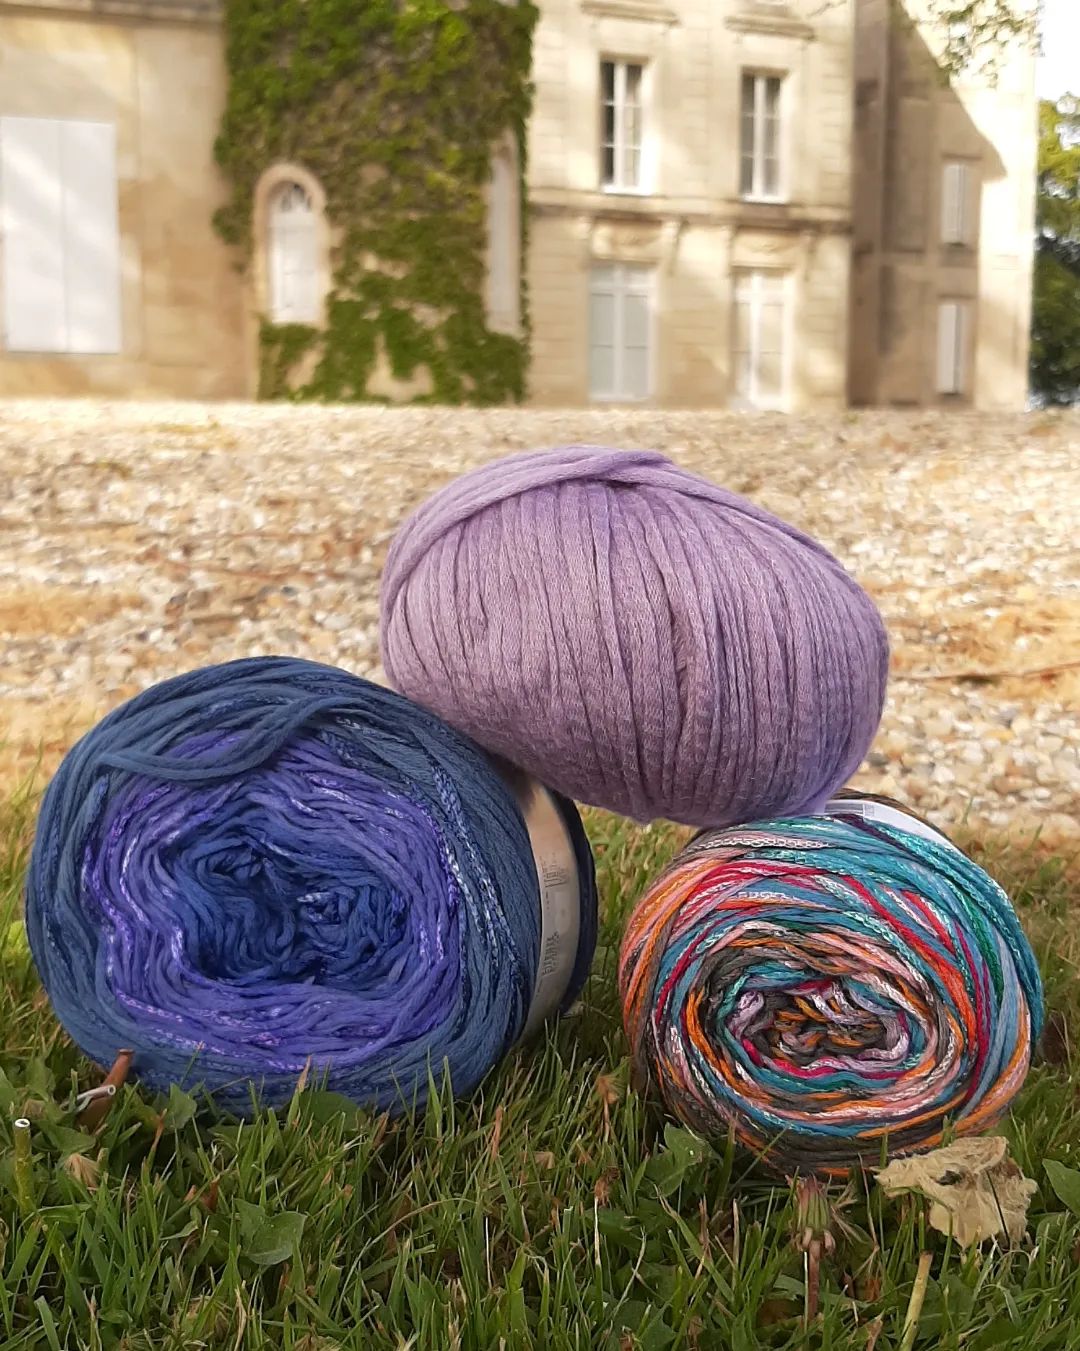 🫐🧶BLOOM ◇ HAPPINESS ◇ KARMA🧶🫐

🏰Face au château, nous vous présentons 3 jolis cotons :

1️⃣Bloom: 70% coton, 18% viscose et 12% lin. Disponible en 13 coloris.

2️⃣Happiness : 65% coton et 35% polyamide. Disponible en 21 coloris.

3️⃣Karma : 42% coton, 25% viscose, 25% acrylique et 8% lin. Disponible en 7 coloris.

Bon lundi !🤗
•
#bloom #karma #happiness #langyarns_official #langyarns #ladylaine #wooladdicts #wooladdictsbylangyarns #langyarnsbloom #langyarnskarma #wooladdictshappiness #tricot #crochet #lundi #monday #yarn #yarnlove #yarnaddict #yarns #macau #aquitaine #picoftheday #photooftheday #coton #cottonaddict #cotton #loveyarn #lovecrochet #loveknitting #knit